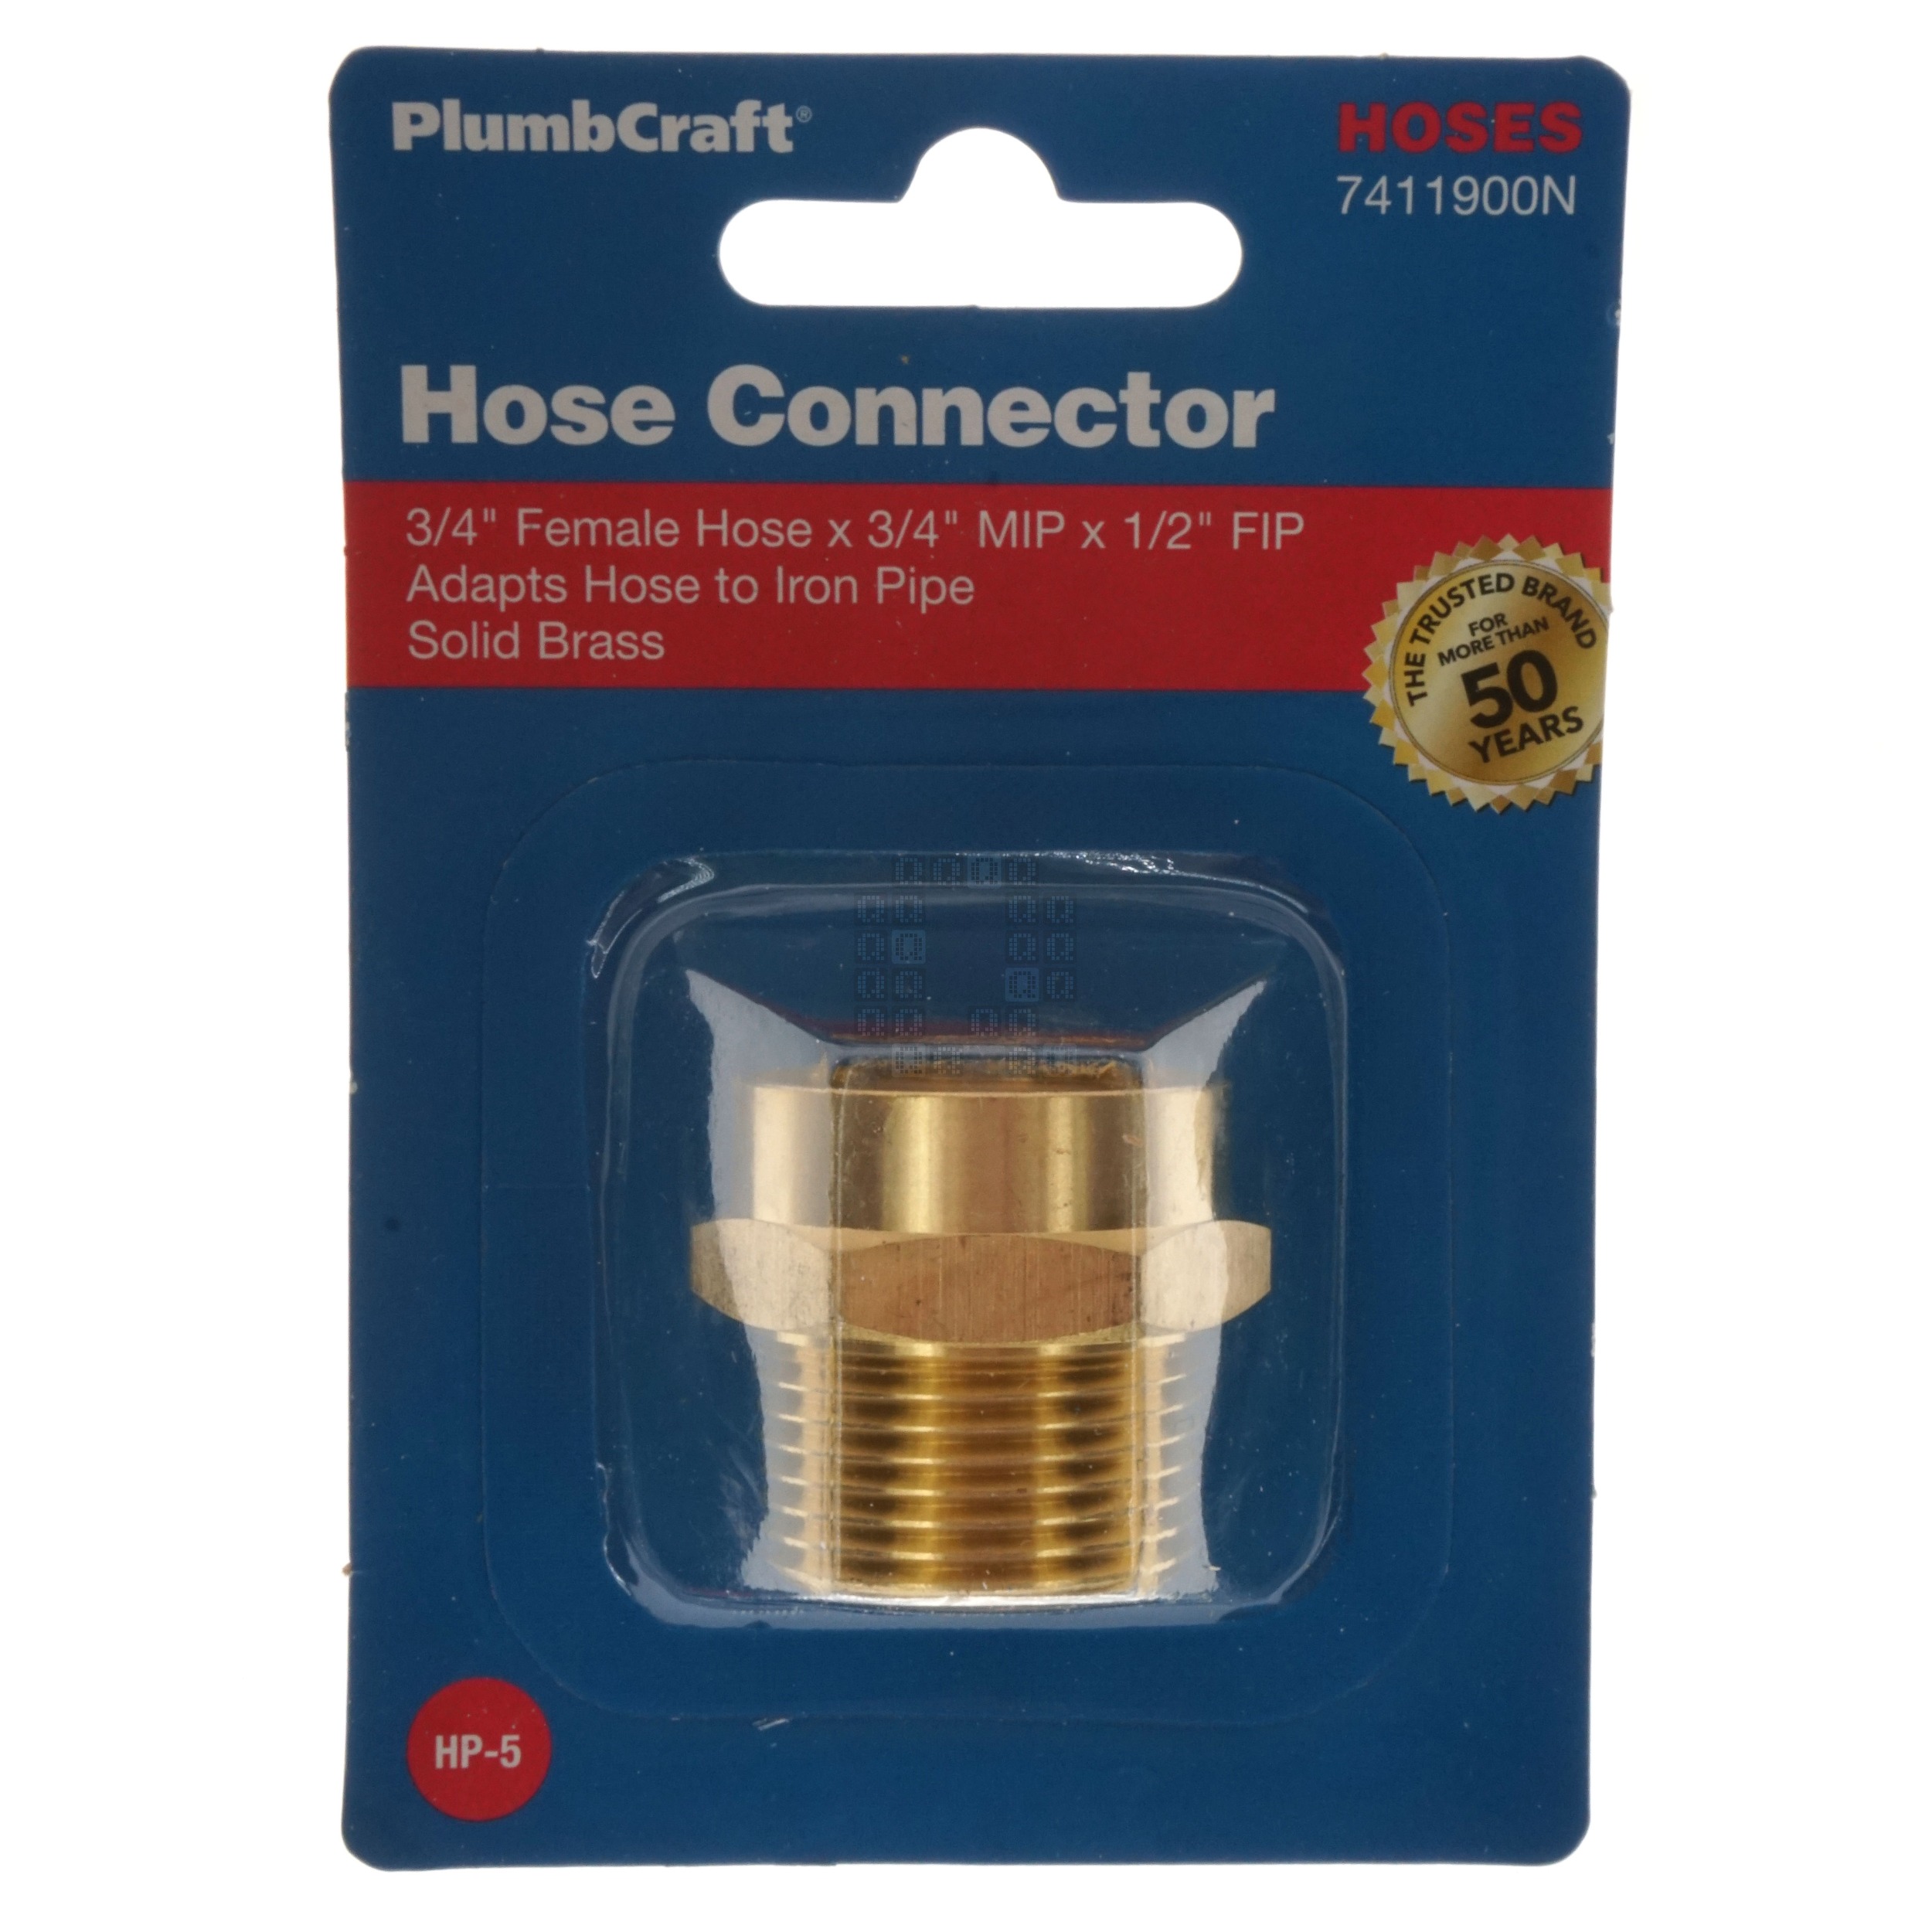 PlumbCraft 7411900N Solid Brass Hose Connector Adapter, 3/4" Female Hose x 3/4" MIP x 1/2" FIP